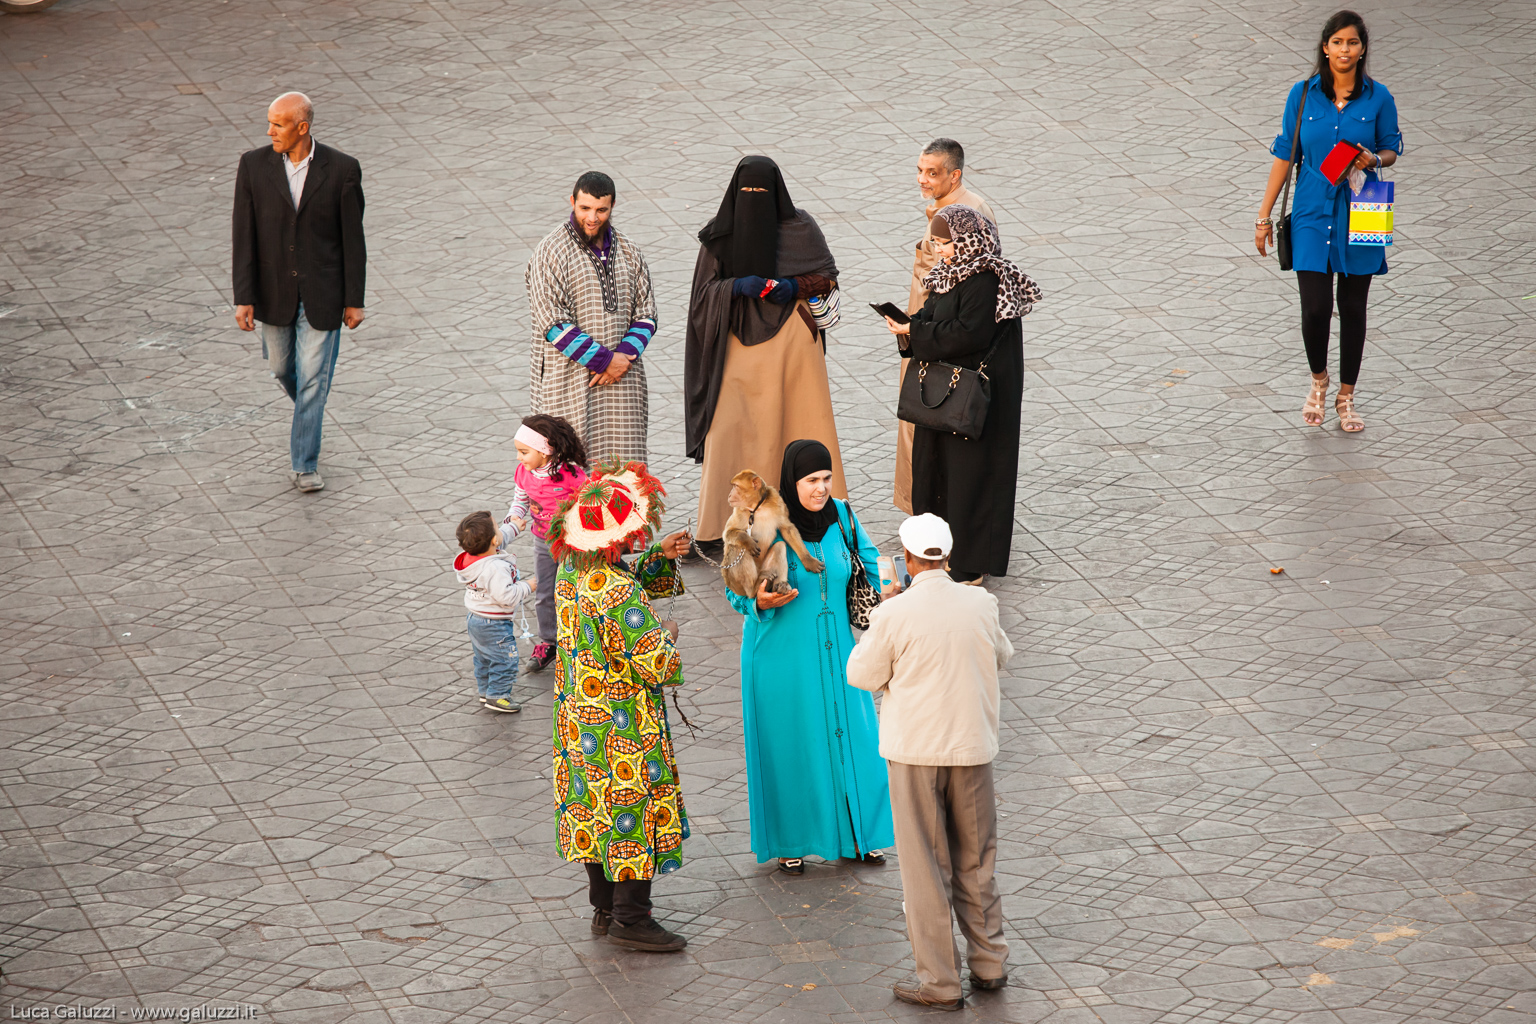 Jemaa el Fna, Marrakech